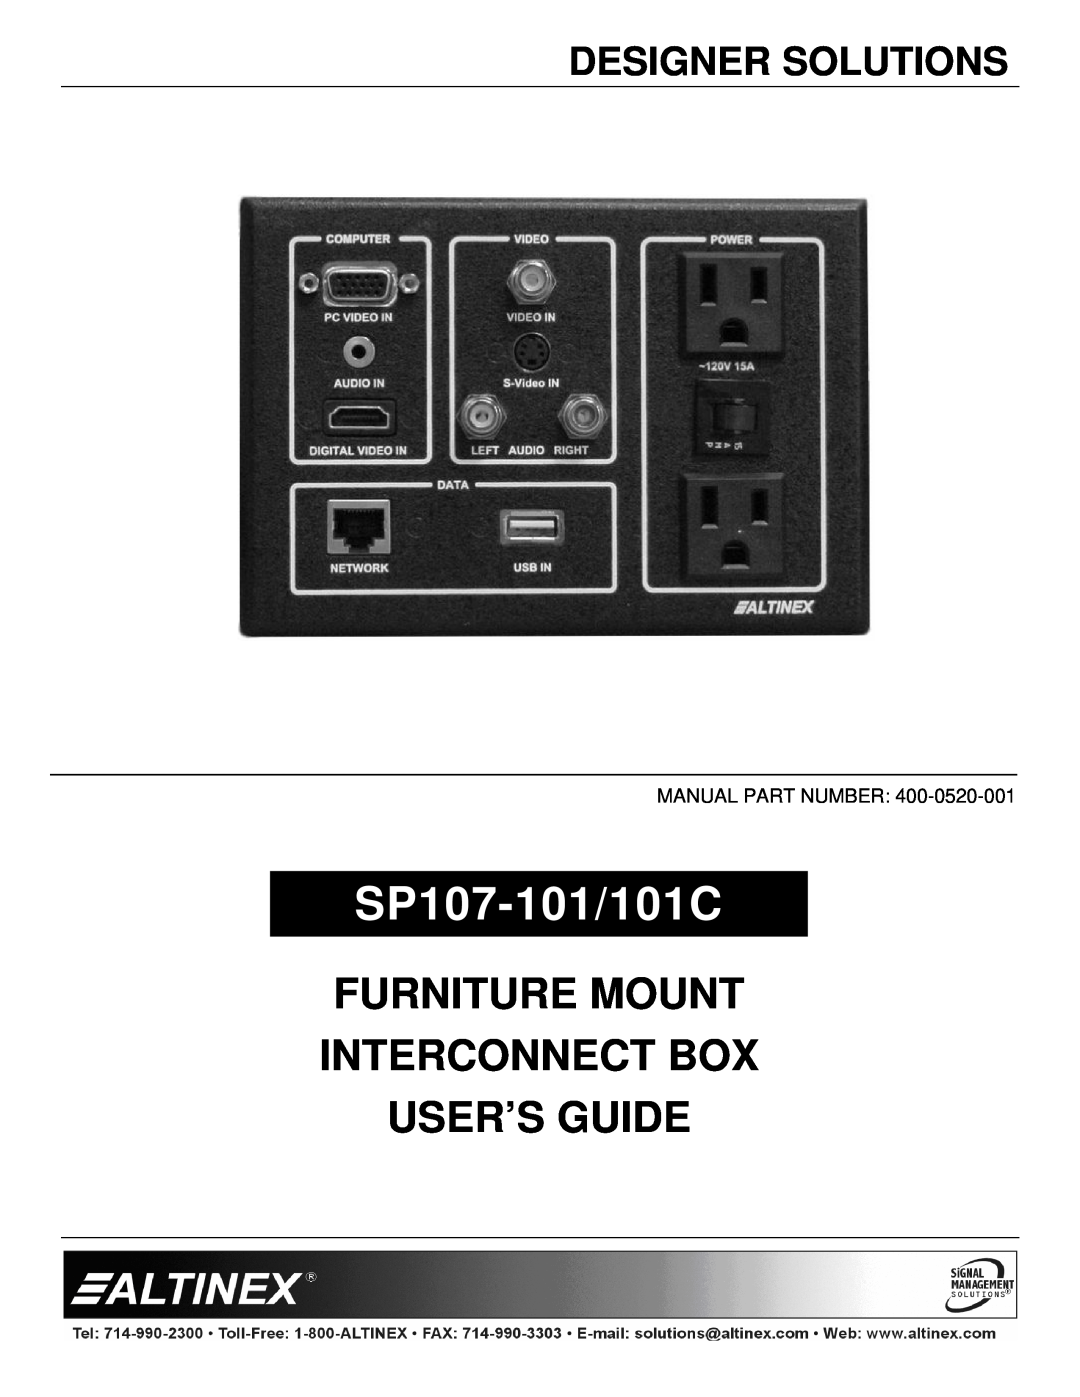 Altinex SP107-101/101C manual Designer Solutions, Furniture Mount Interconnect Box User’S Guide 